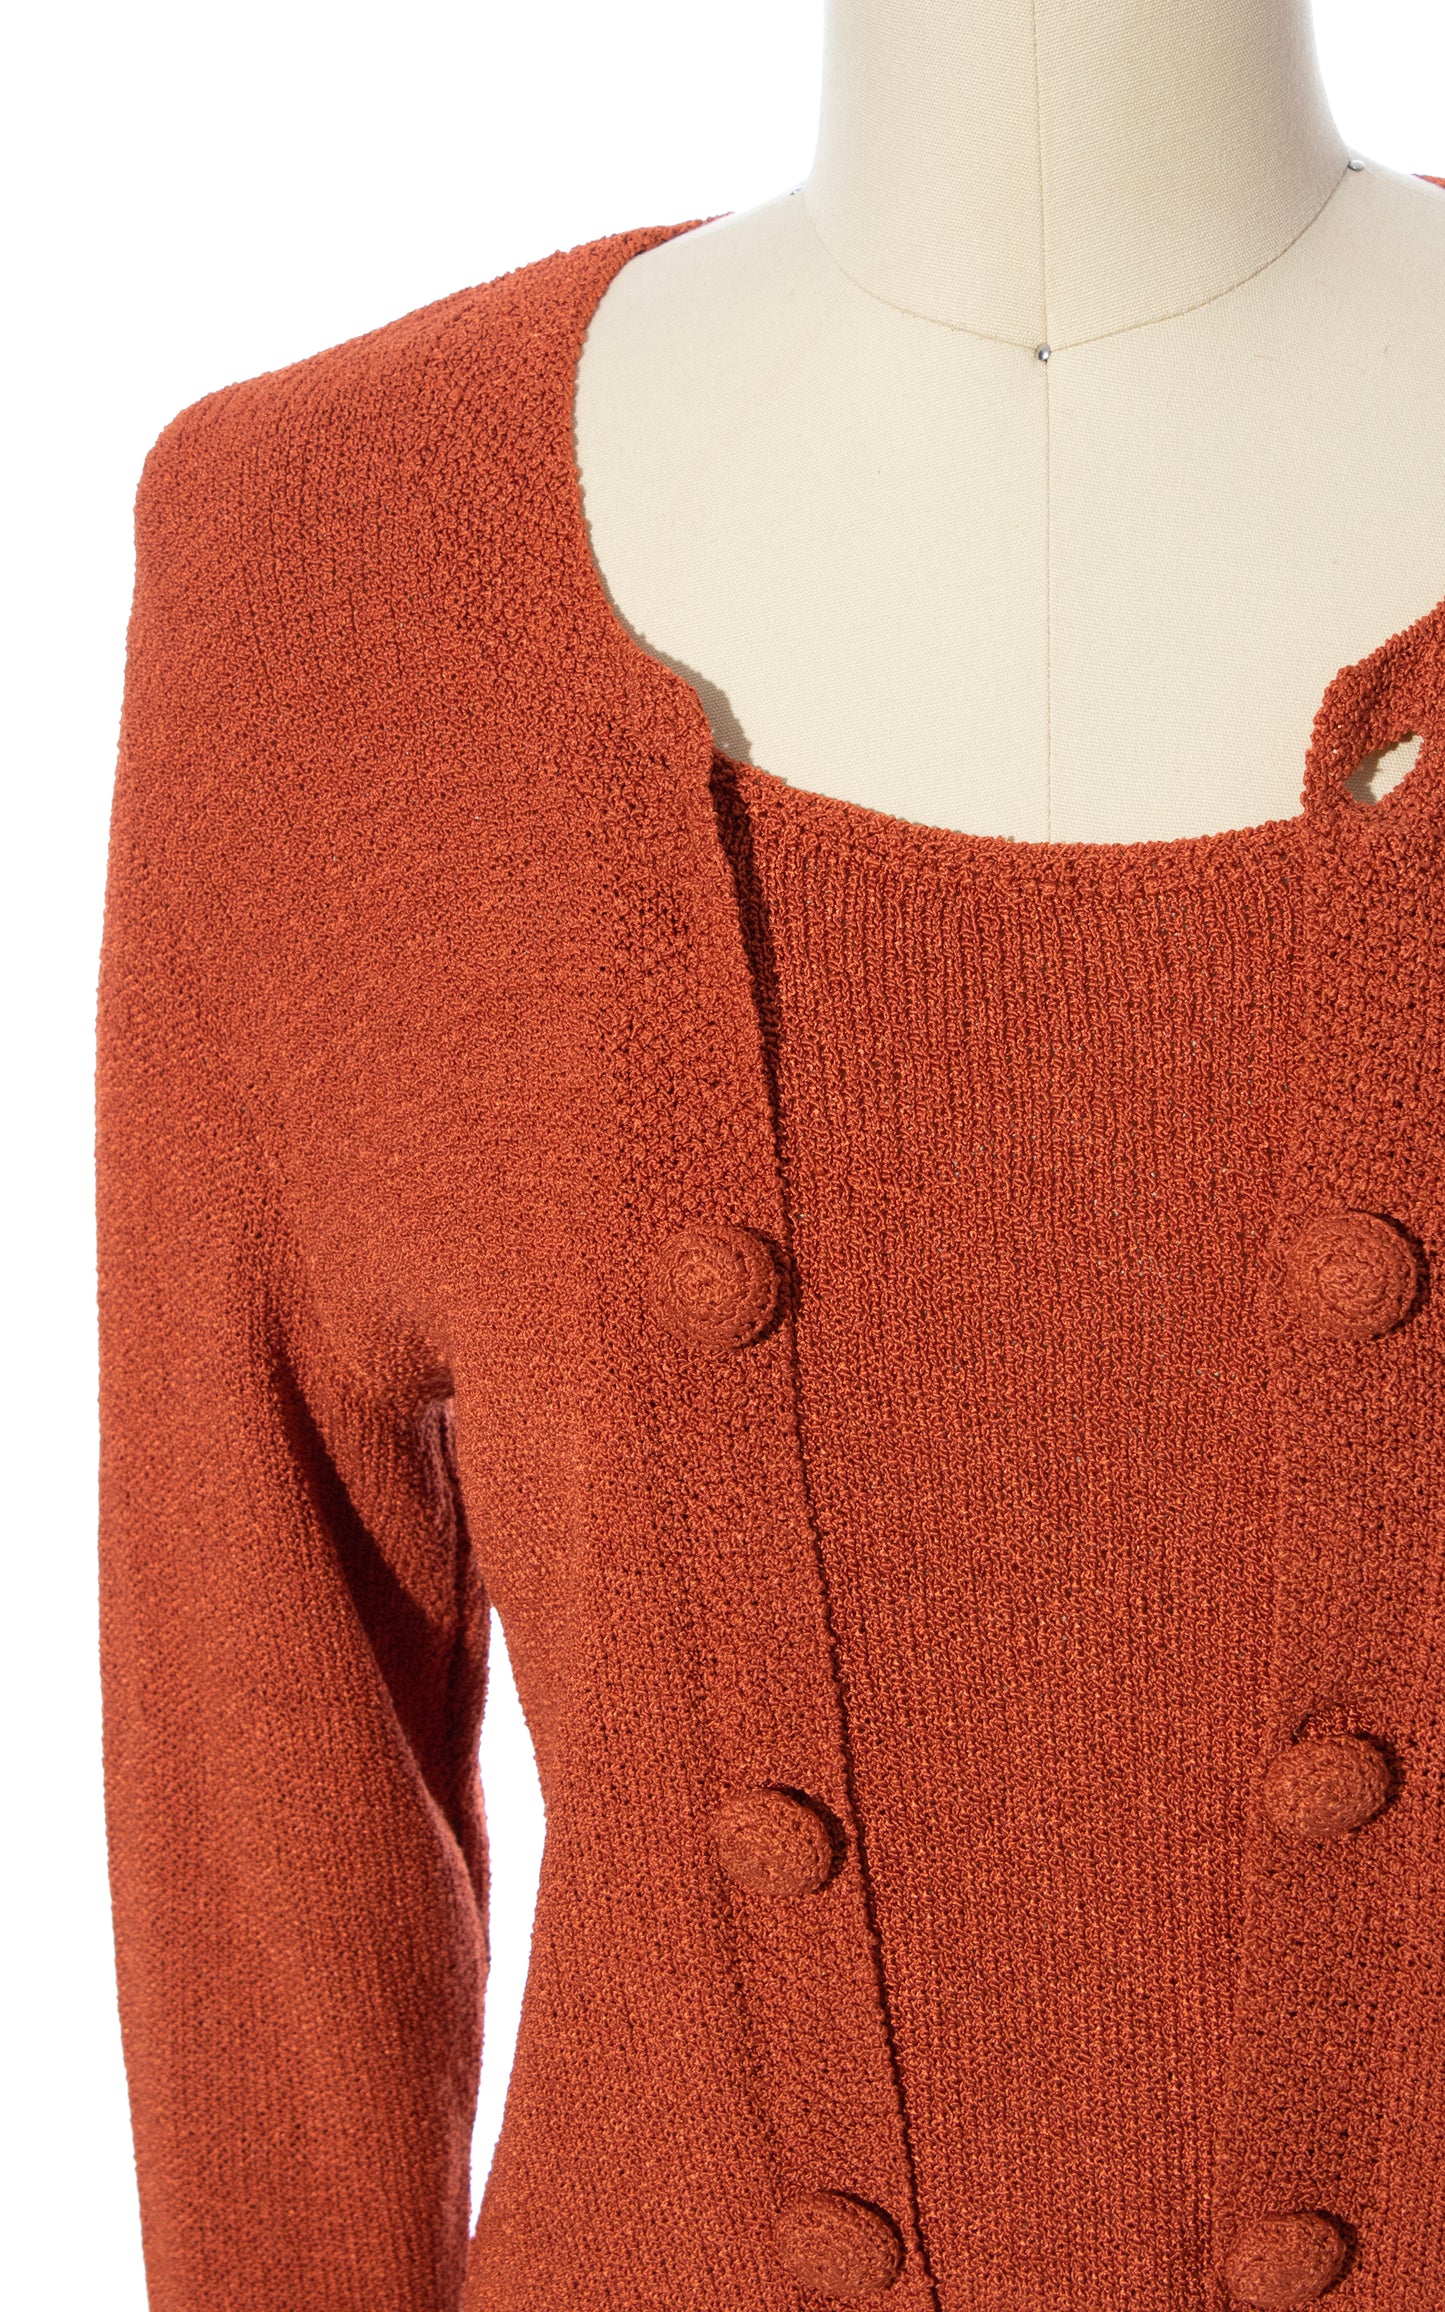 Vintage 30s 1930s Rust Orange Knit Rayon Sweater Top BirthdayLifeVintage